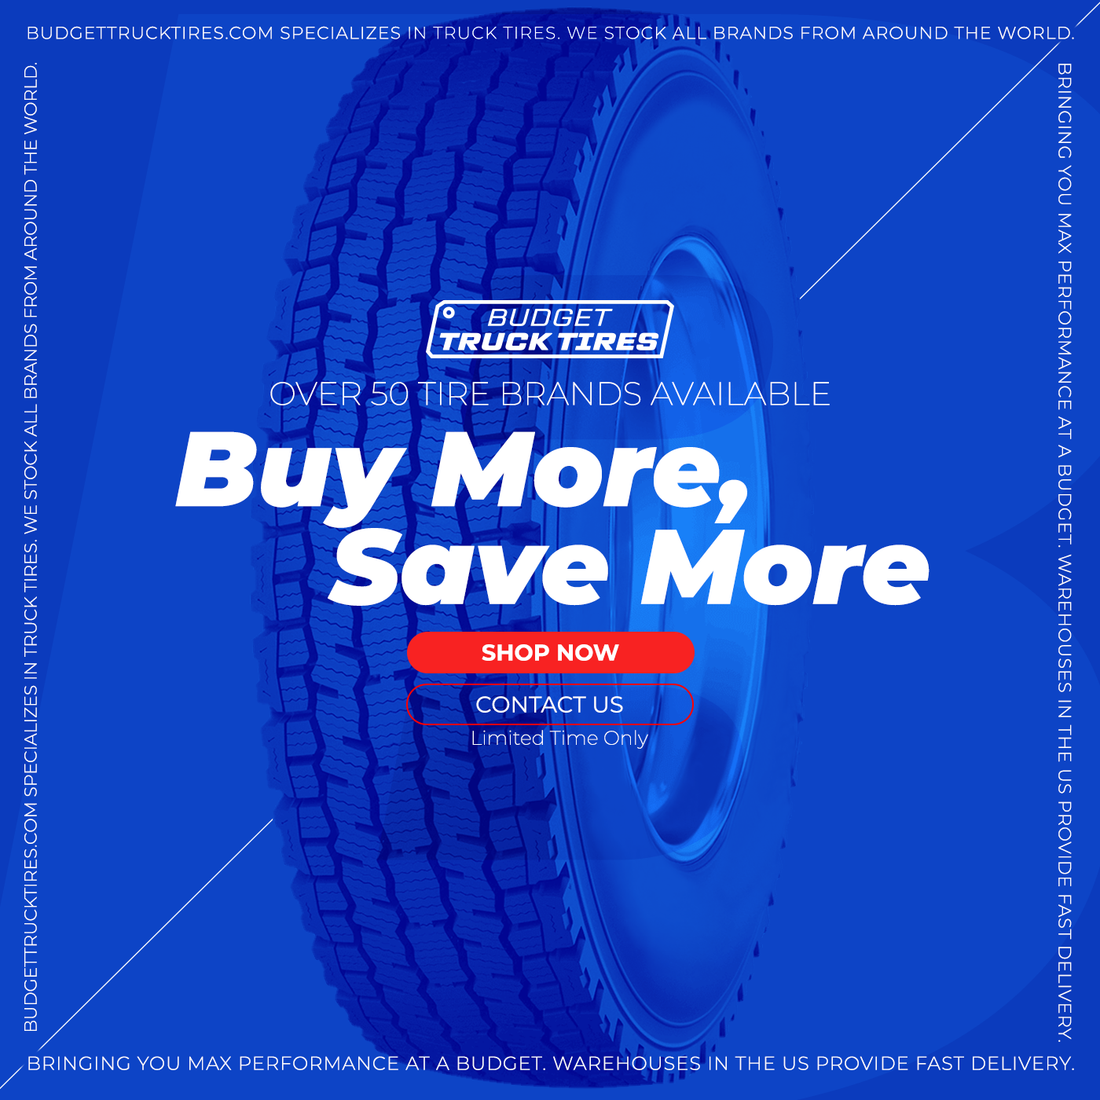 Share More Buy More Save More - Share More Buy More Save More